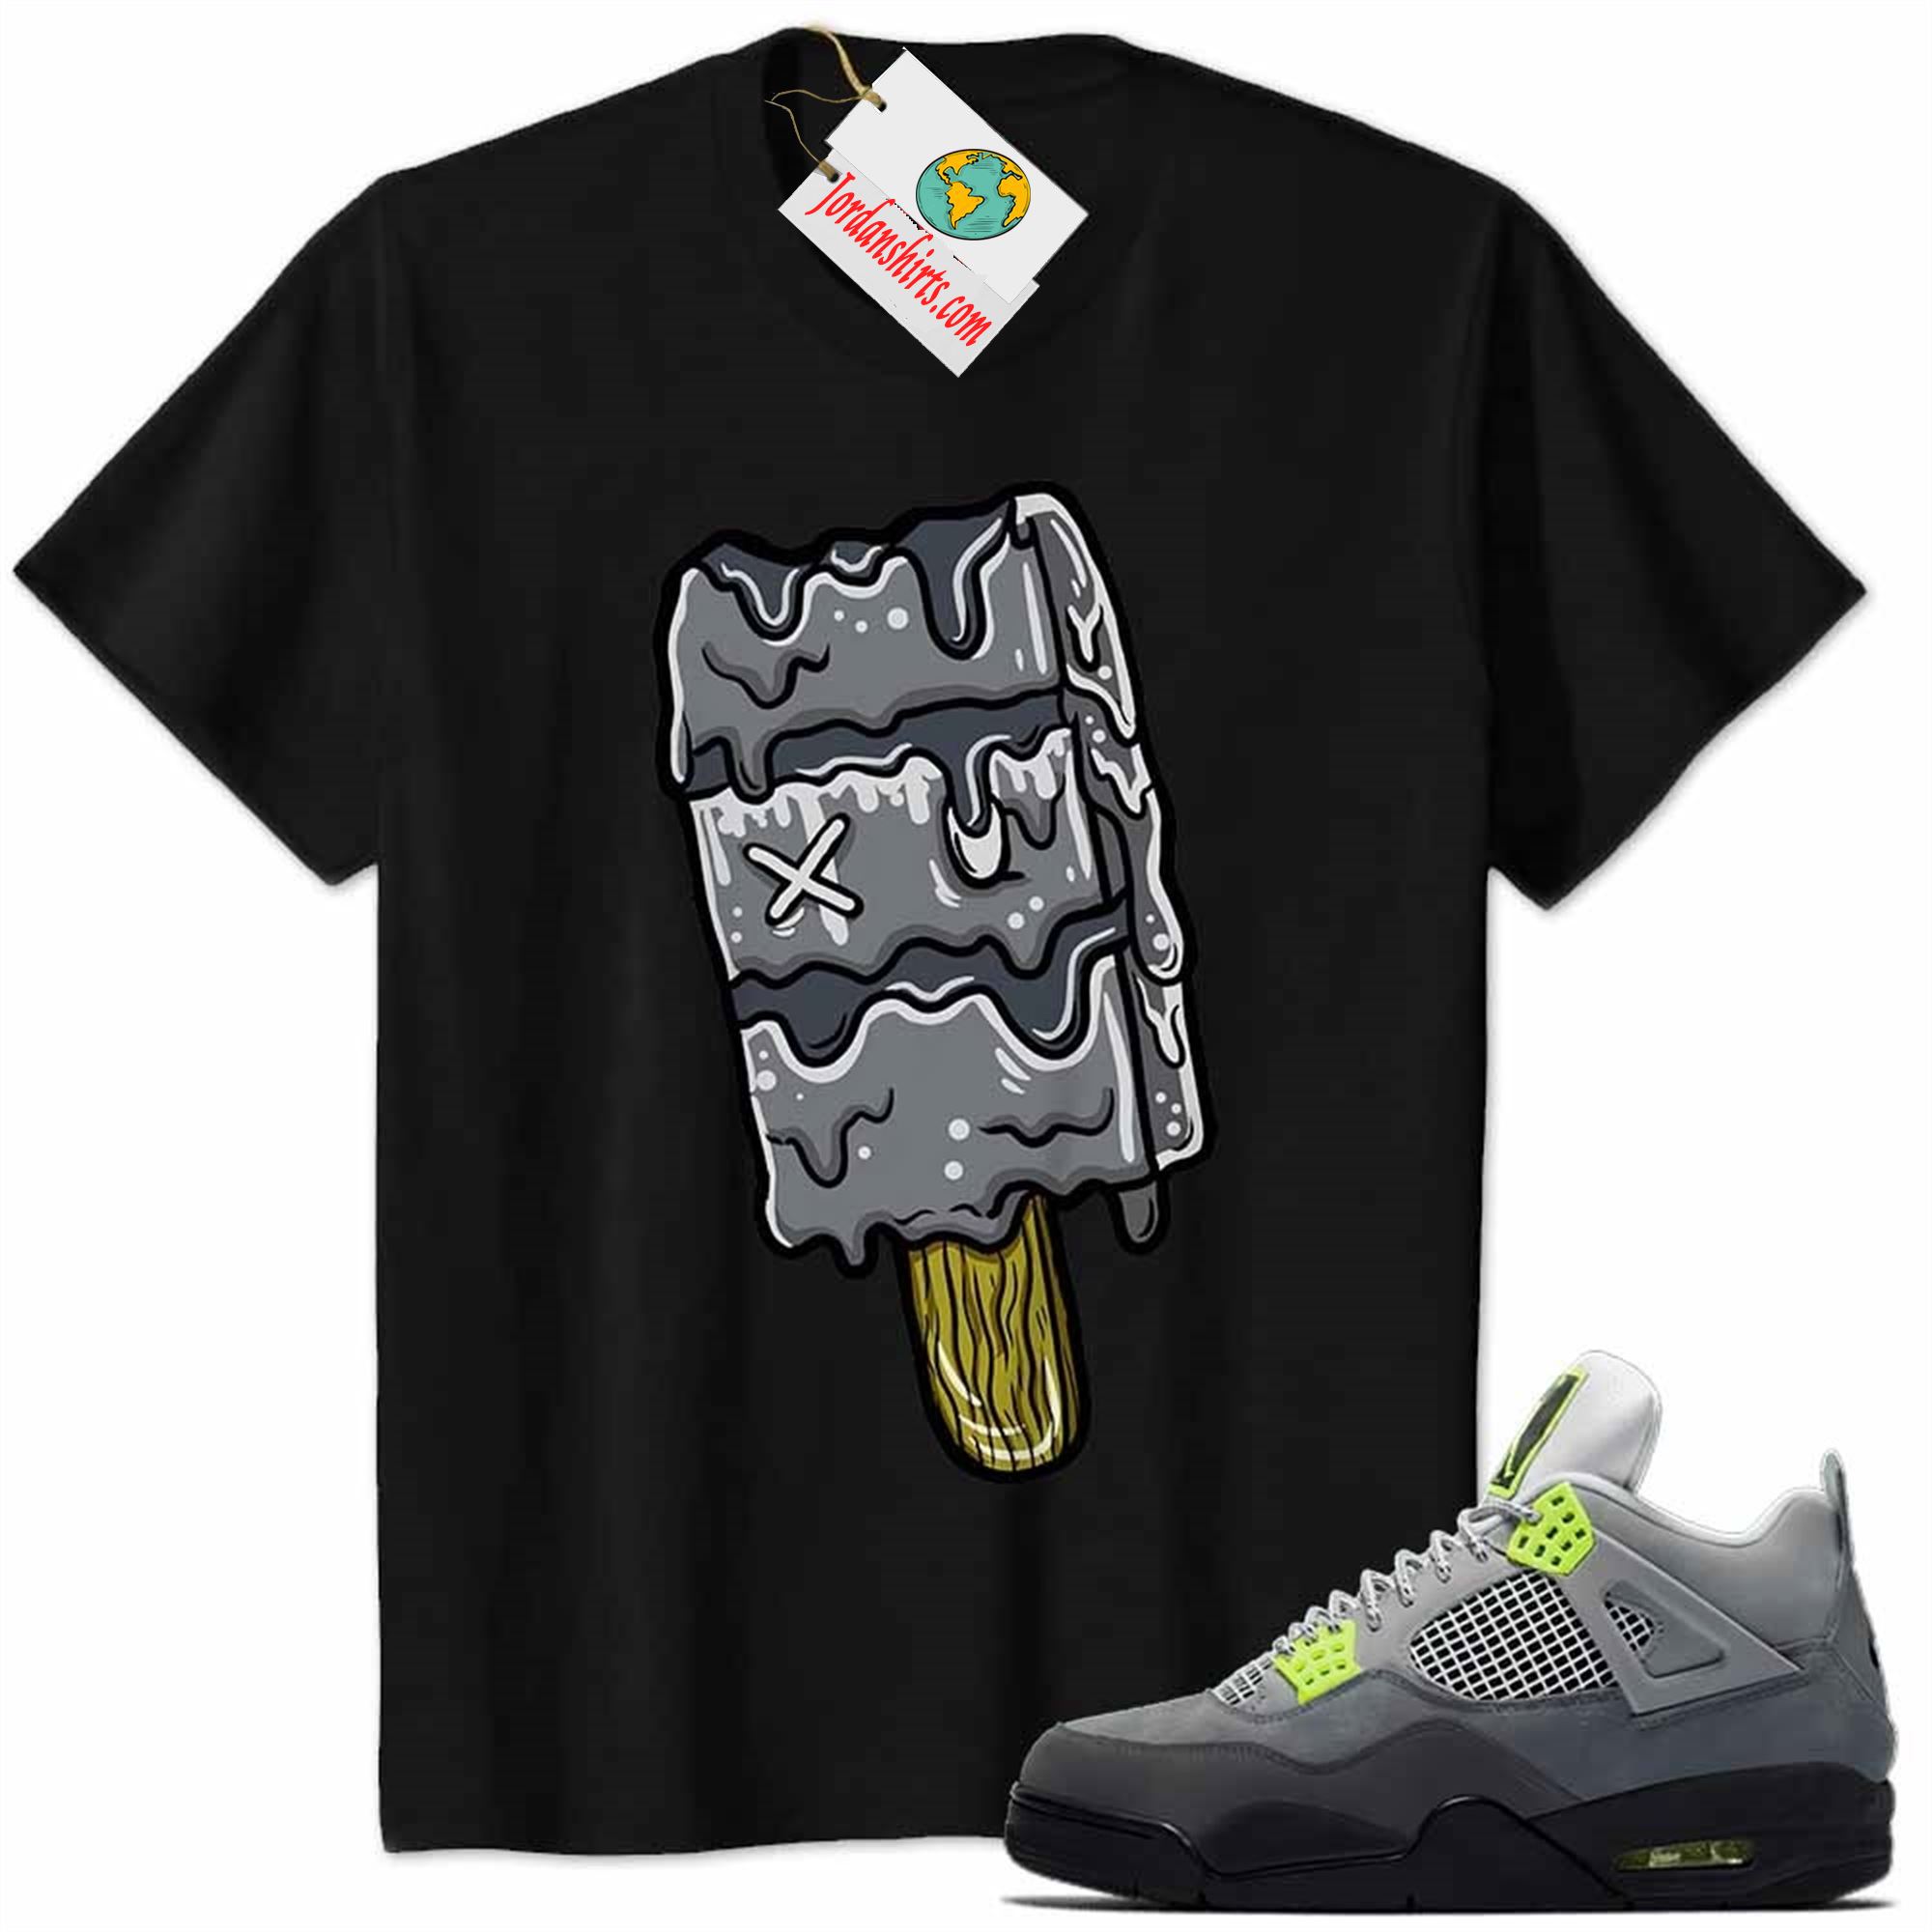 Jordan 4 Shirt, Ice Cream Dripping Black Air Jordan 4 Neon 95 4s Full Size Up To 5xl